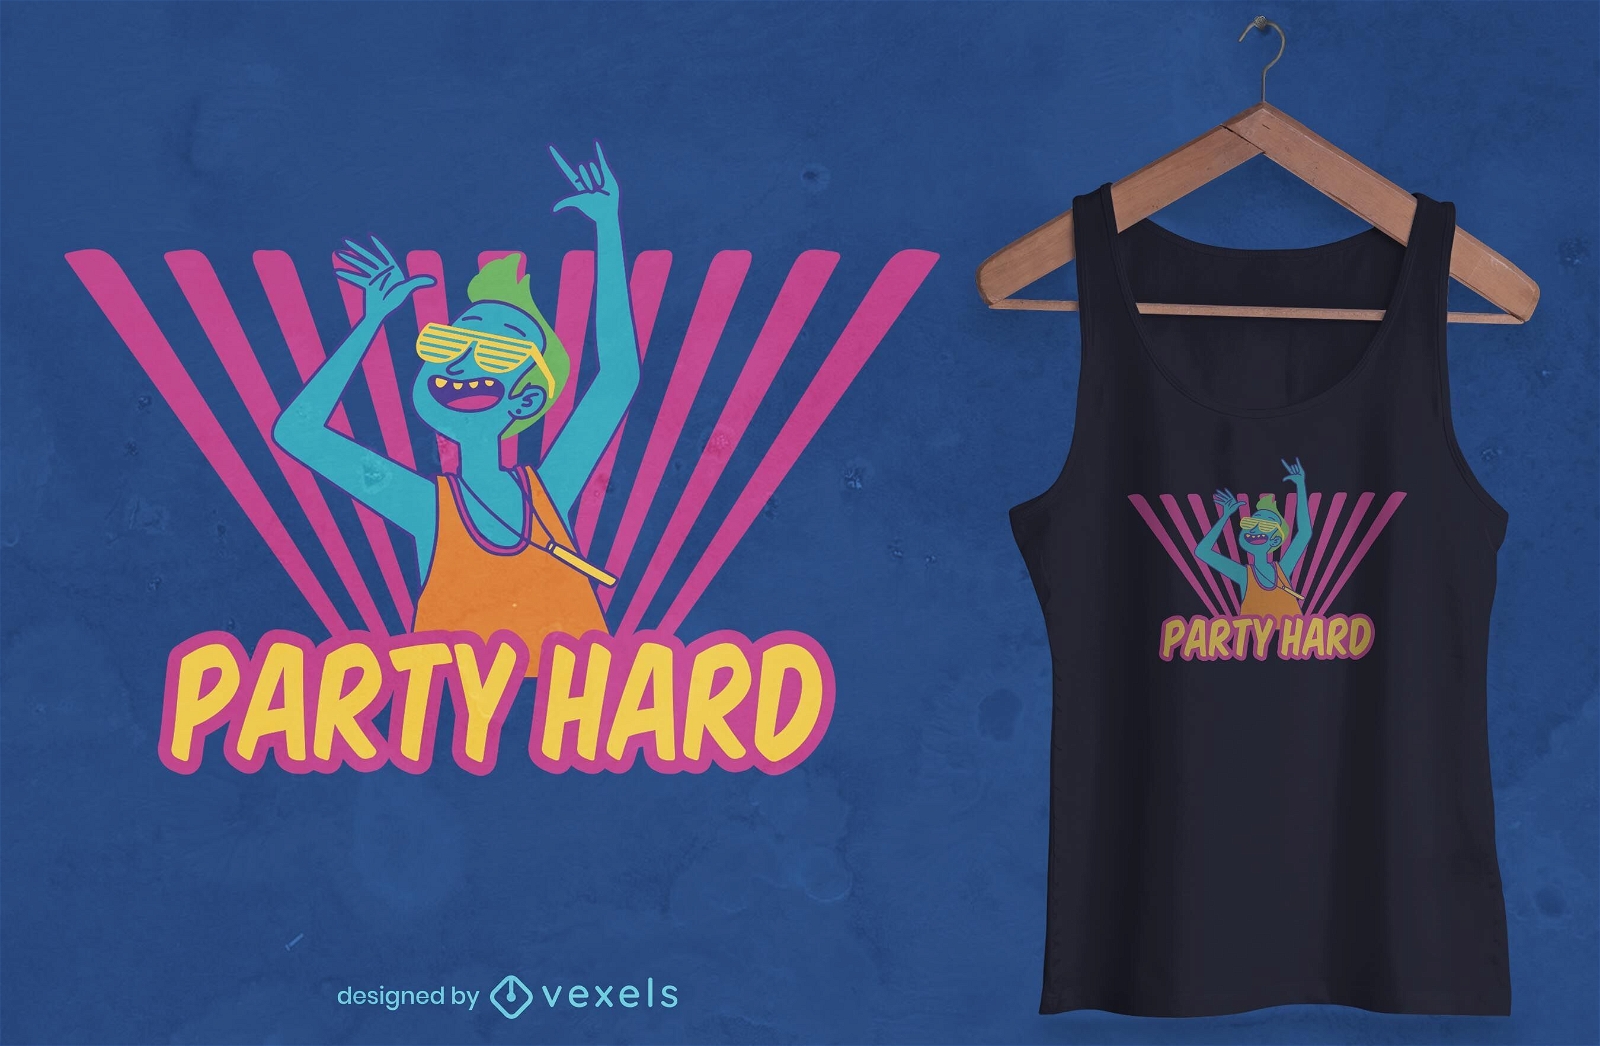 Party hard t-shirt design